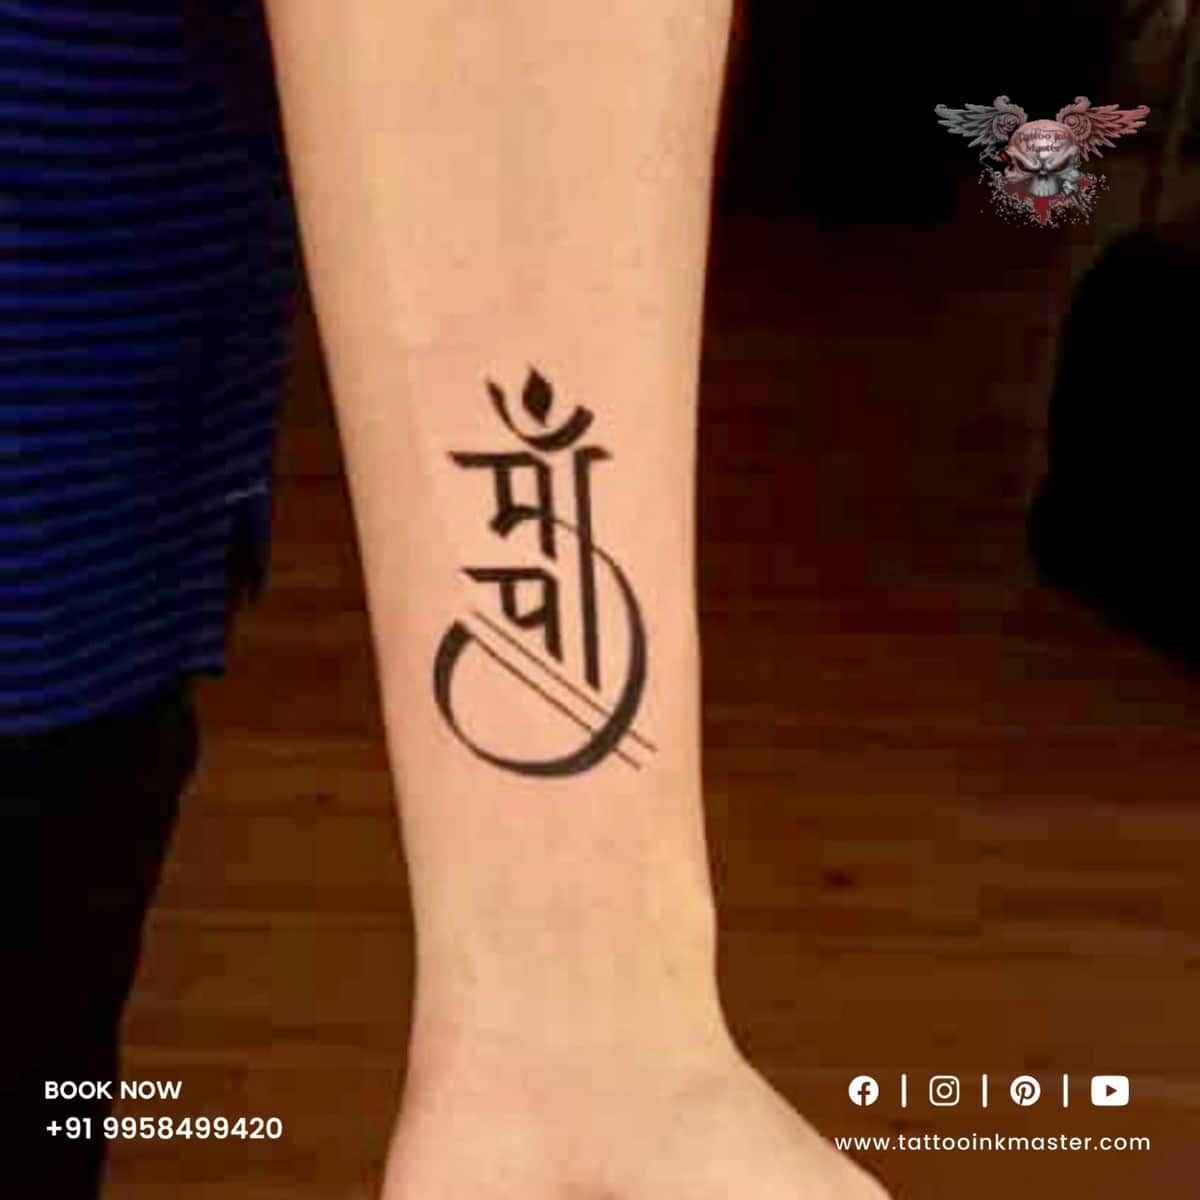 066 | ‪#‎Tattoos‬ ‪#‎Ink‬ ‪#‎Maa‬ ‪#Hindi‬ ‪#calligraphy‬ ‪#… | Flickr‬